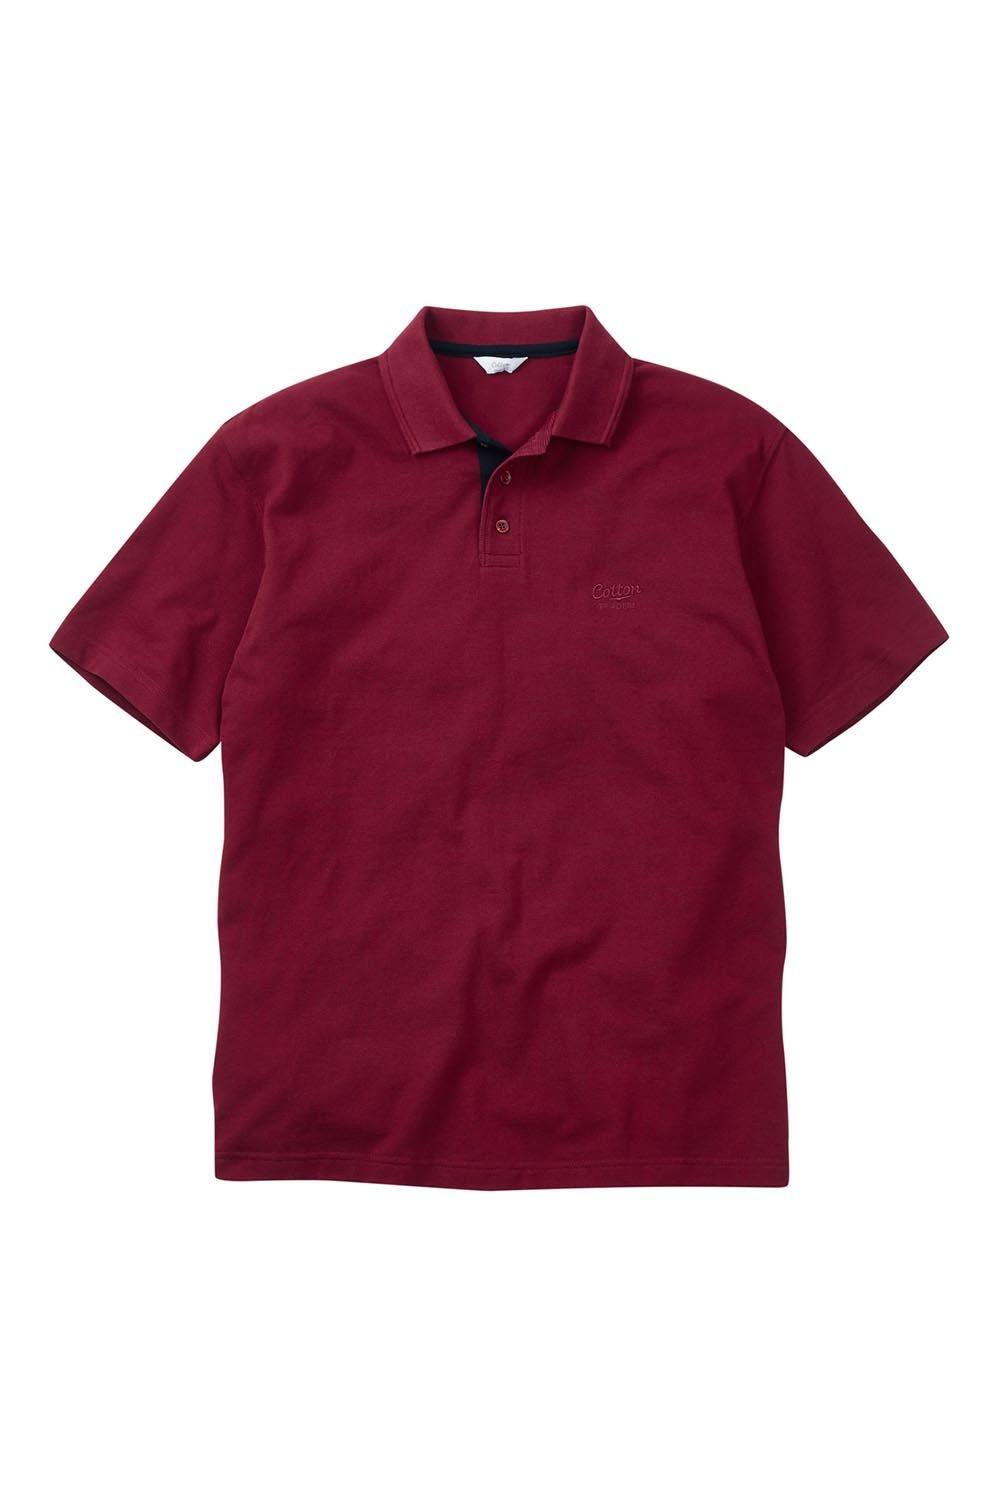 Рубашка поло с коротким рукавом Cotton Traders, красный